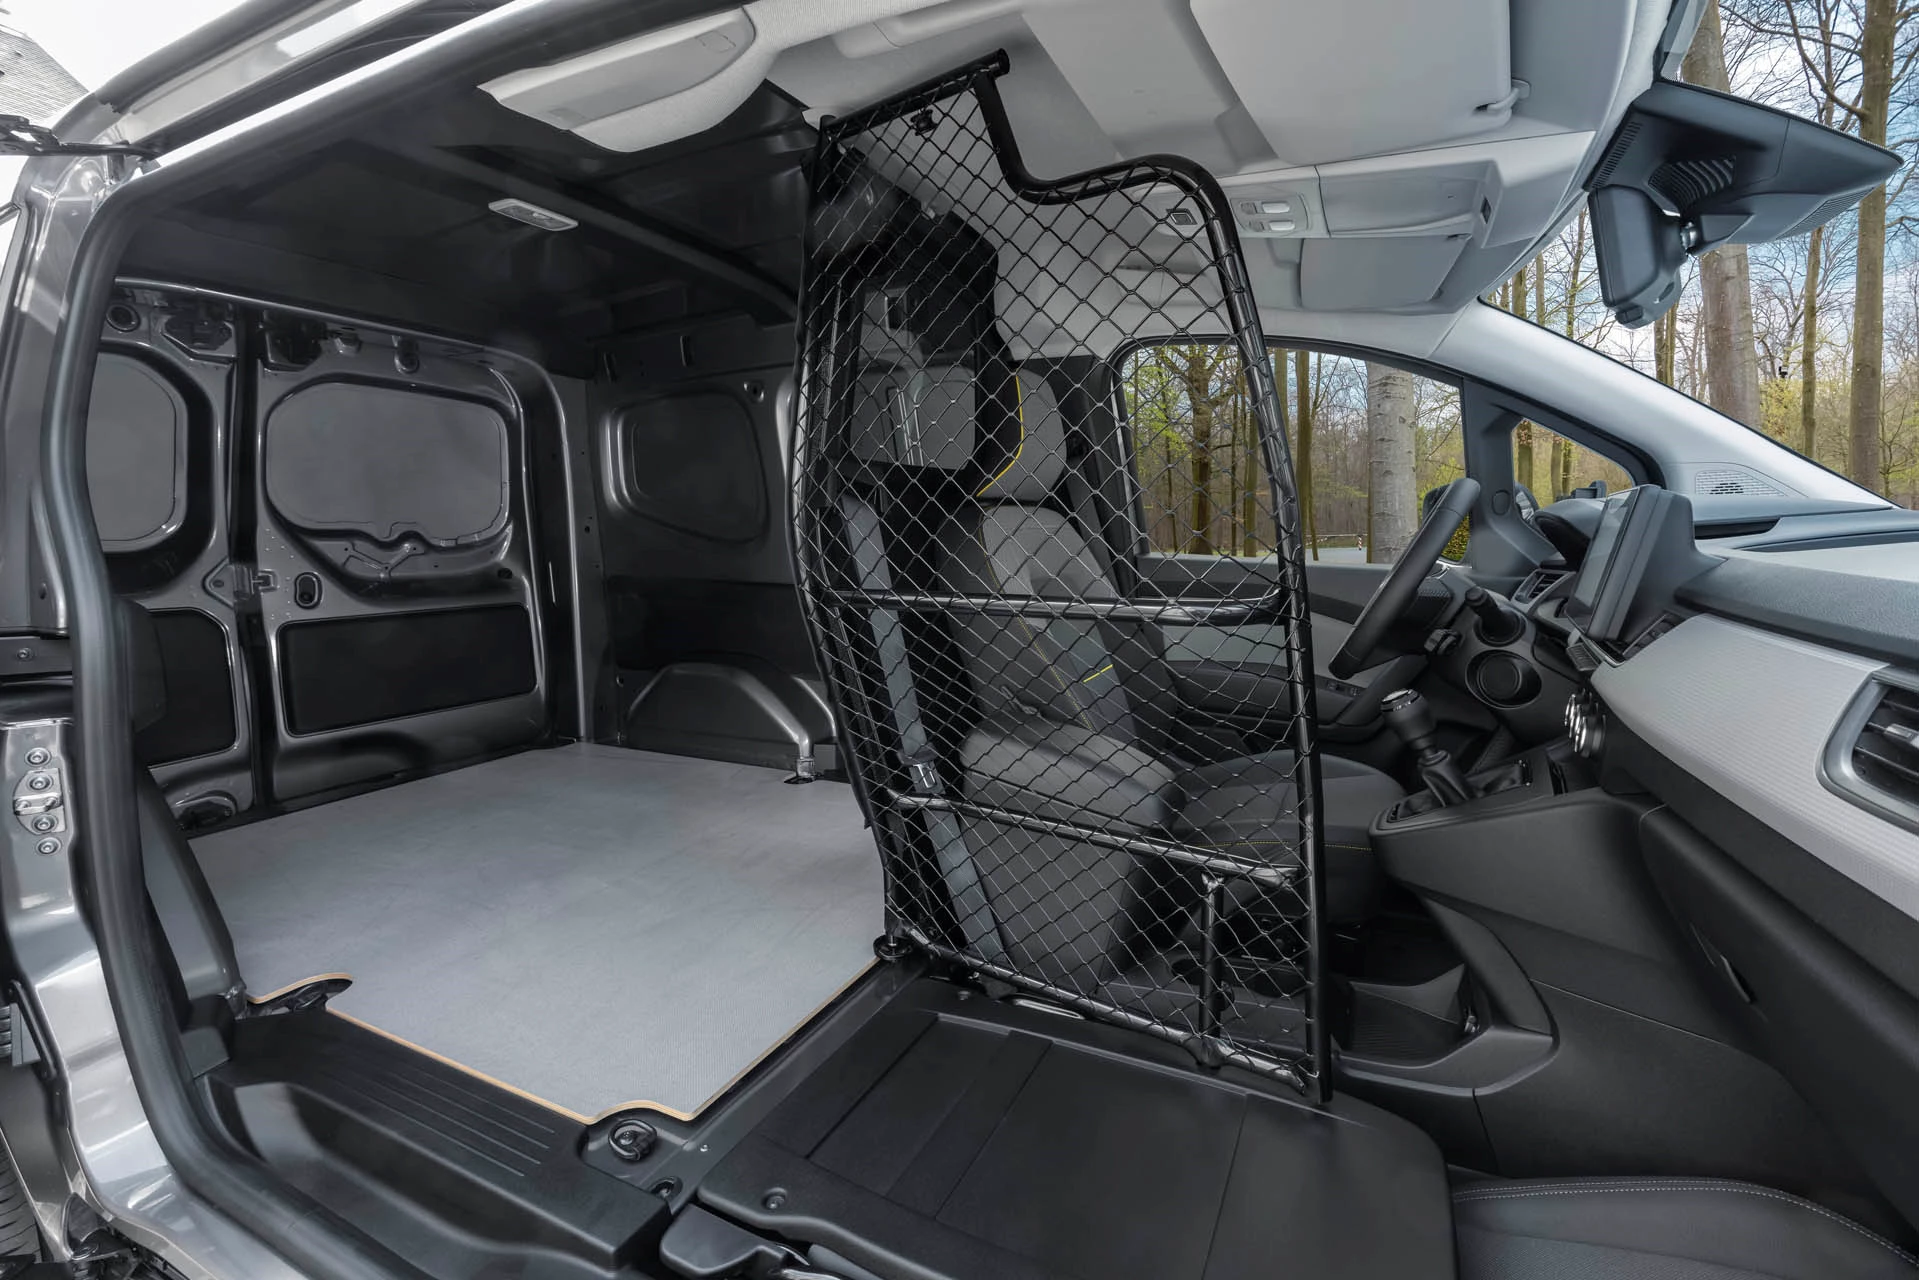 2021 New Renault Kangoo Van Tests Drive (5)